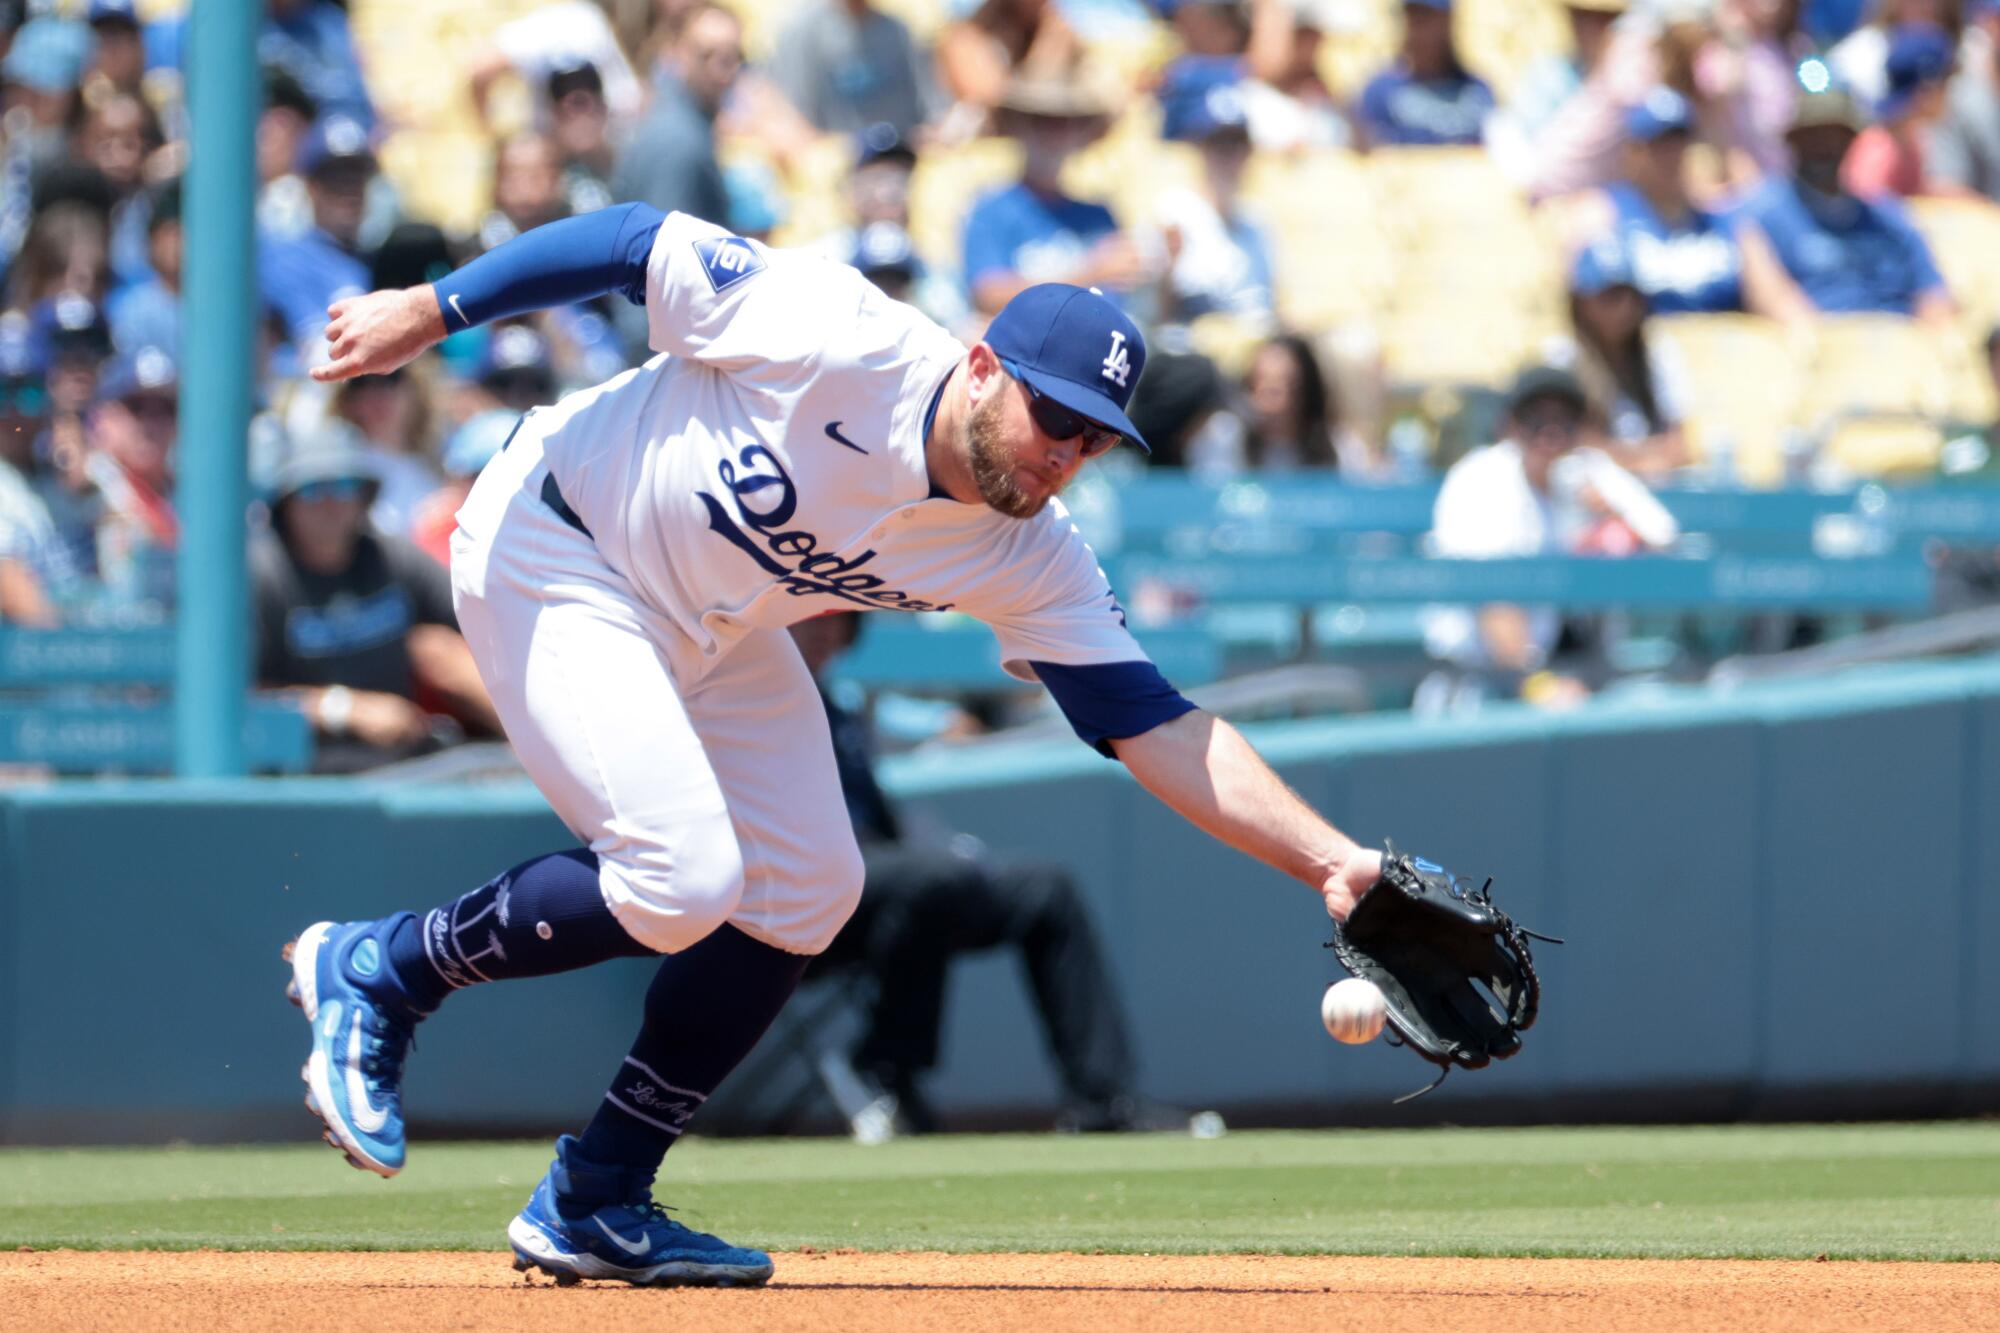 Dodgers third baseman Max Muncy fields the ball during a game.